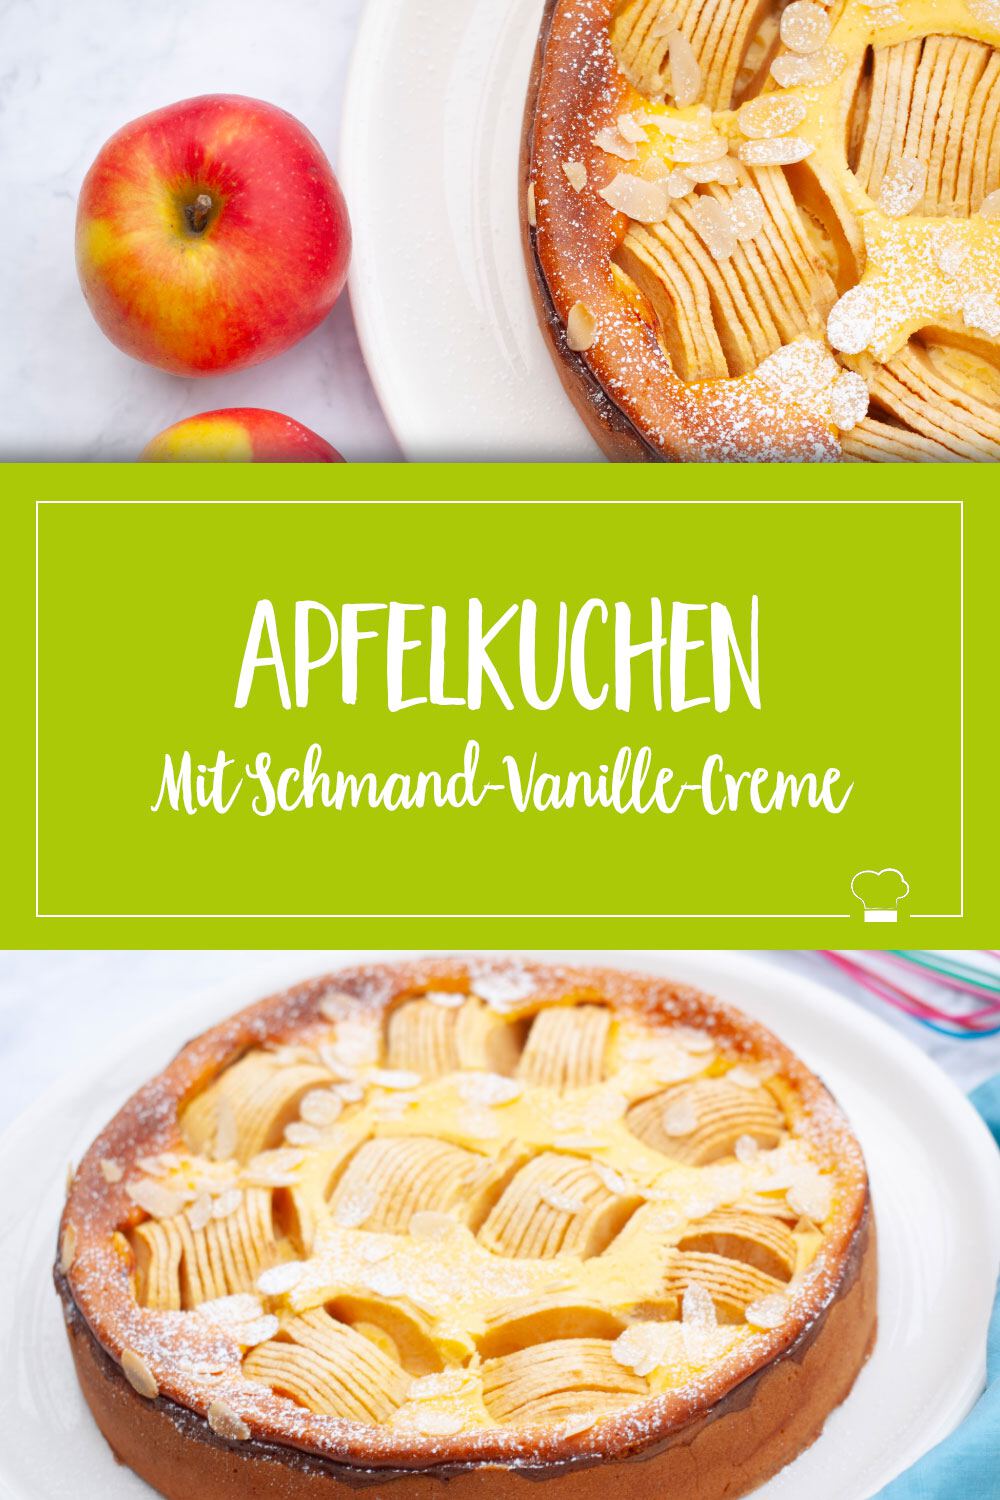 Apfel-Schmand-Kuchen Pinterest